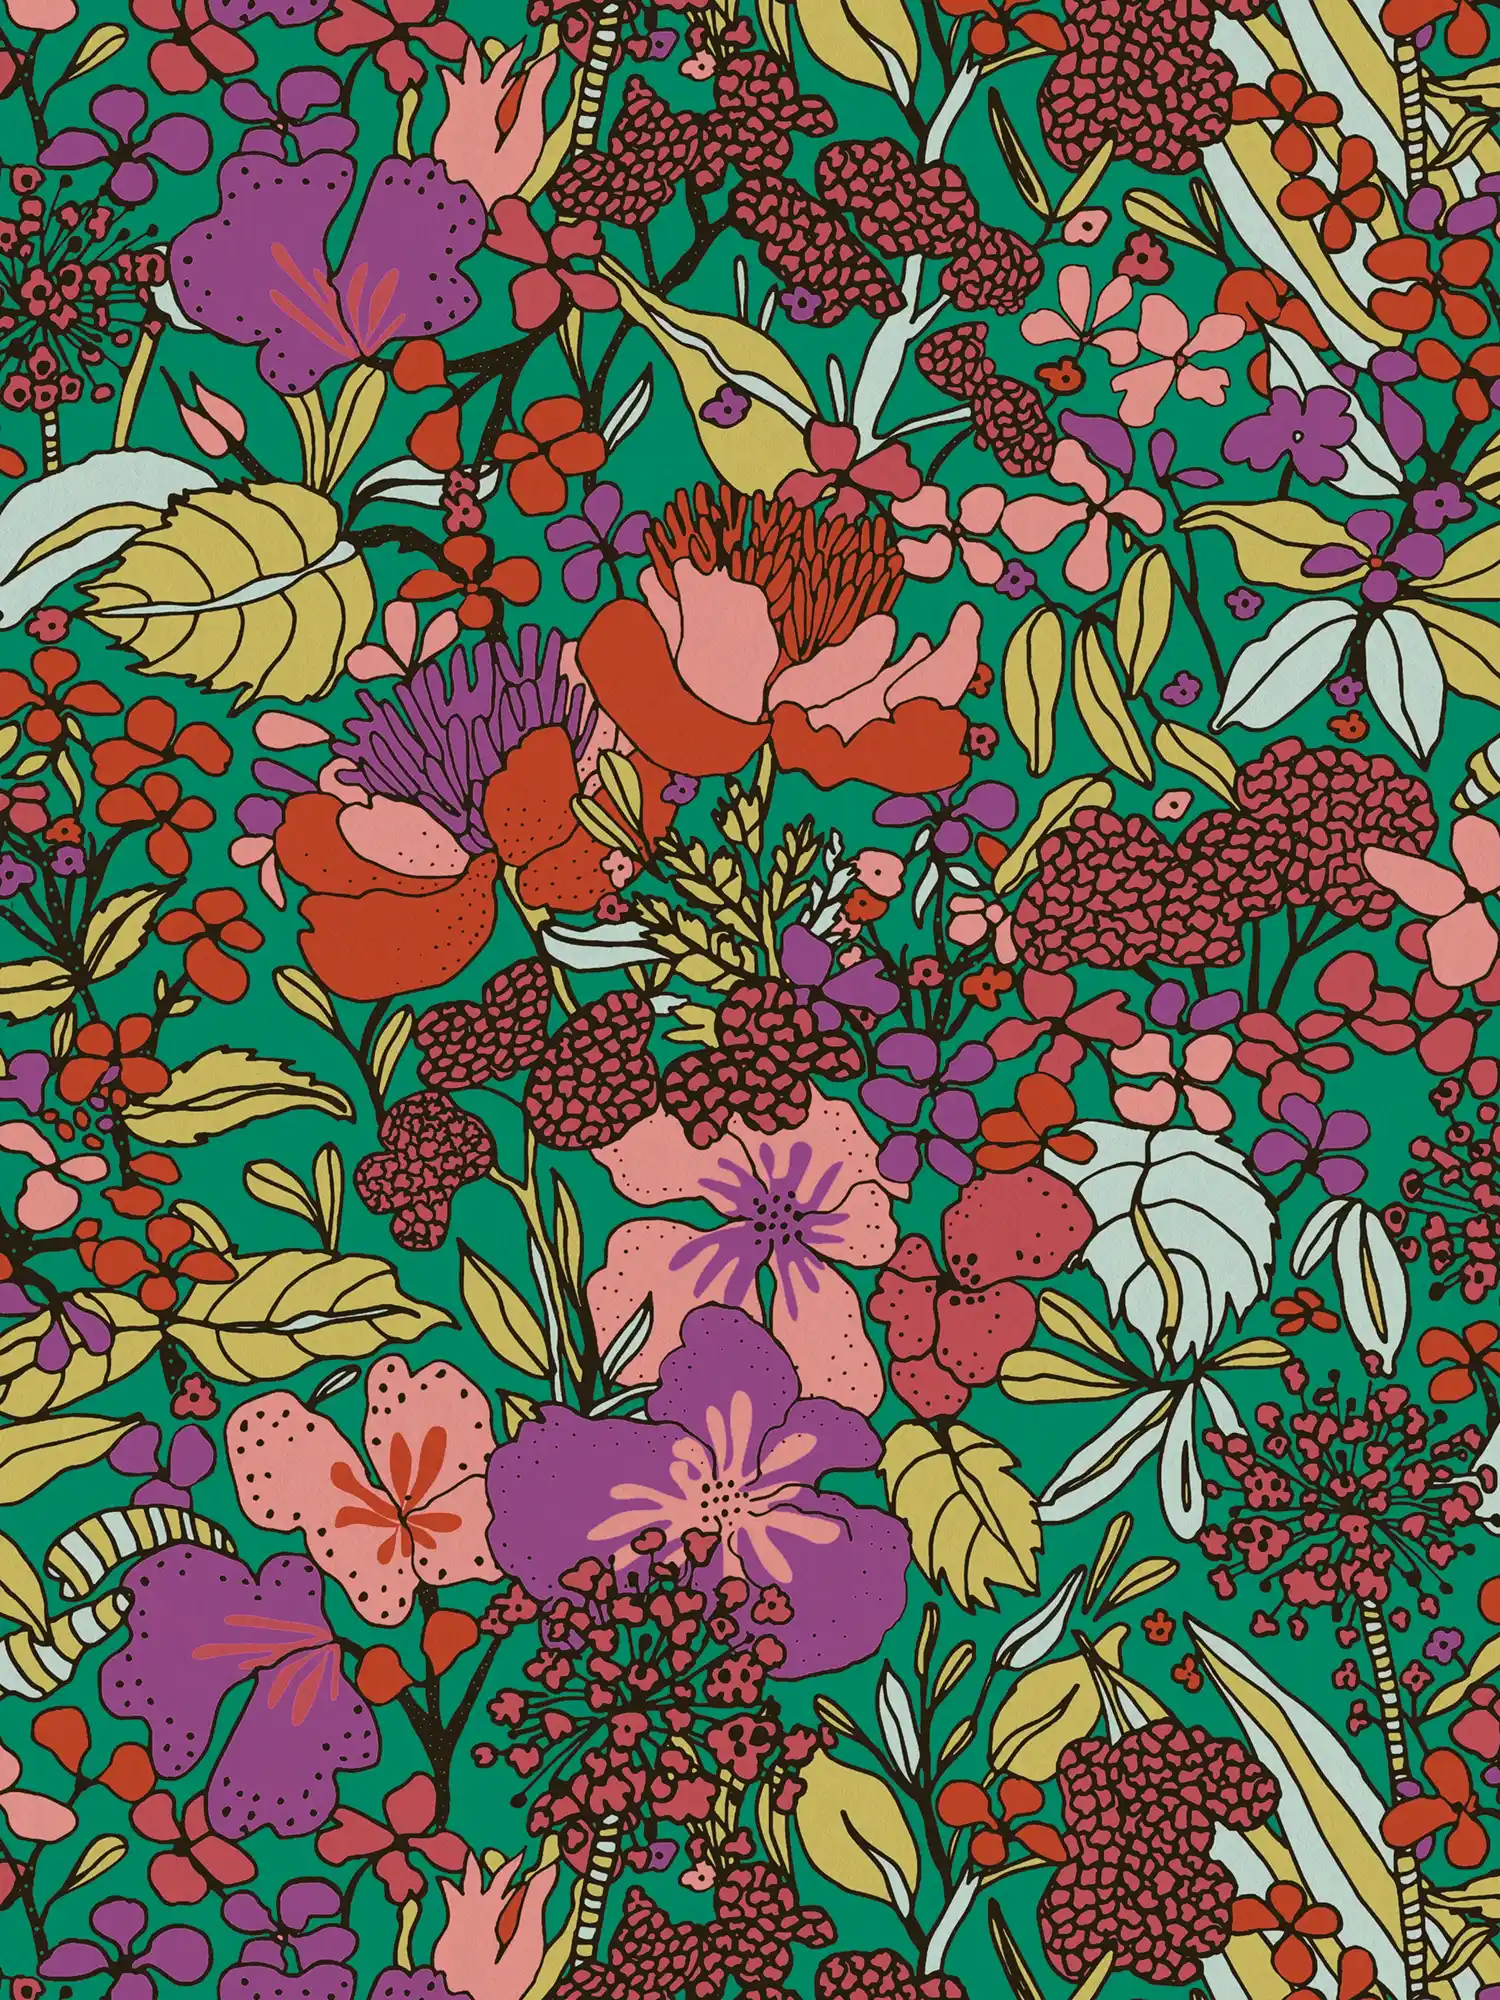 Tapete Blumen Muster bunt im Colour Block Stil – Bunt, Grün, Rot
